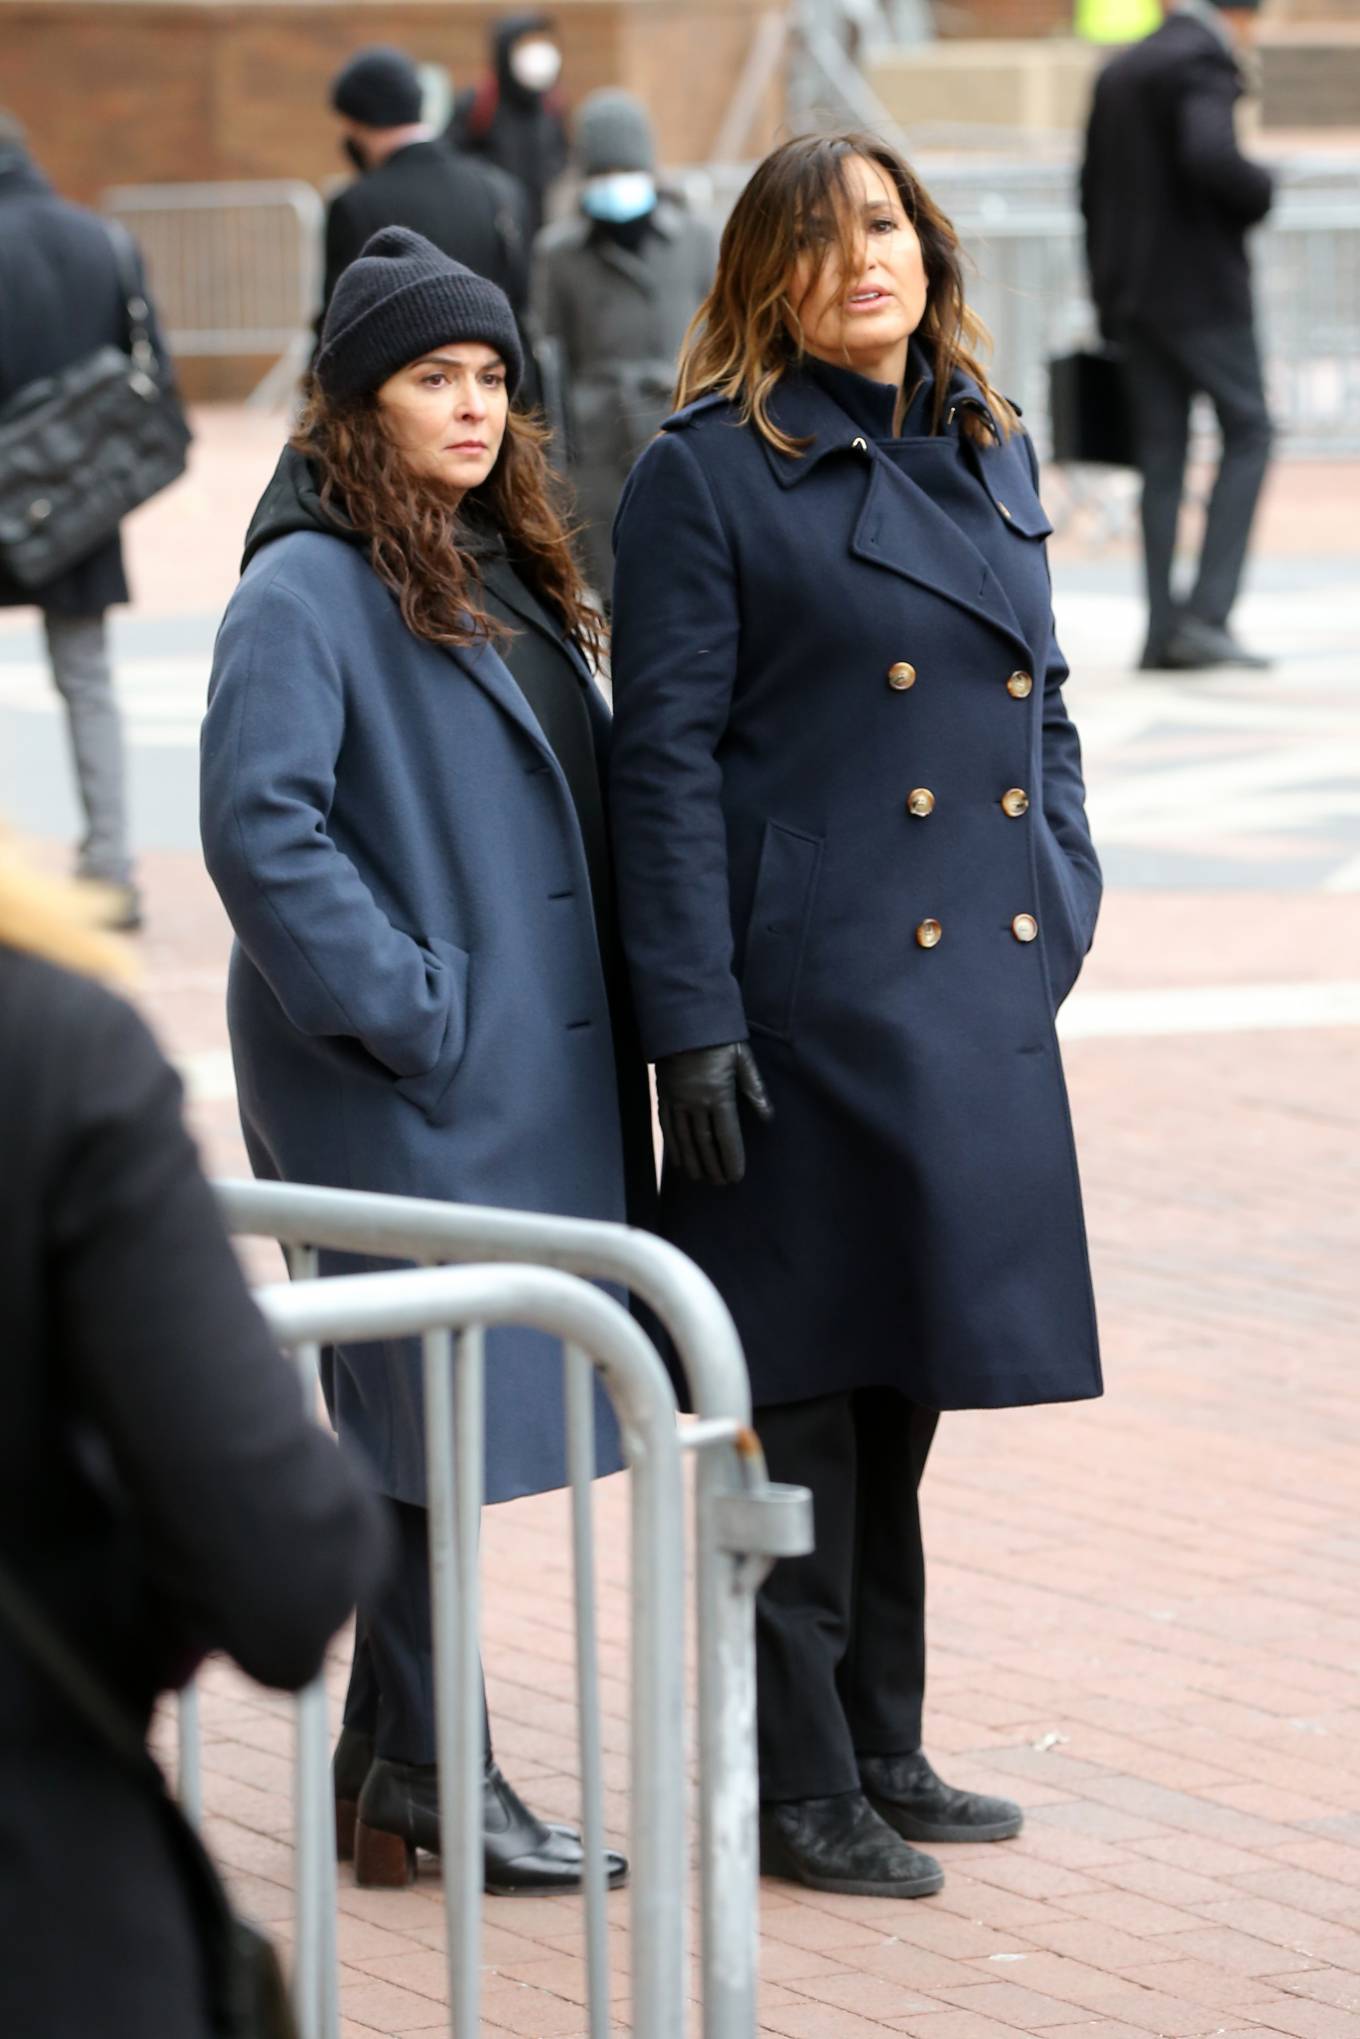 Mariska Hargitay and Annabella Sciorra – Film ‘Law and Order: SVU’ at One Police Plaza in New York